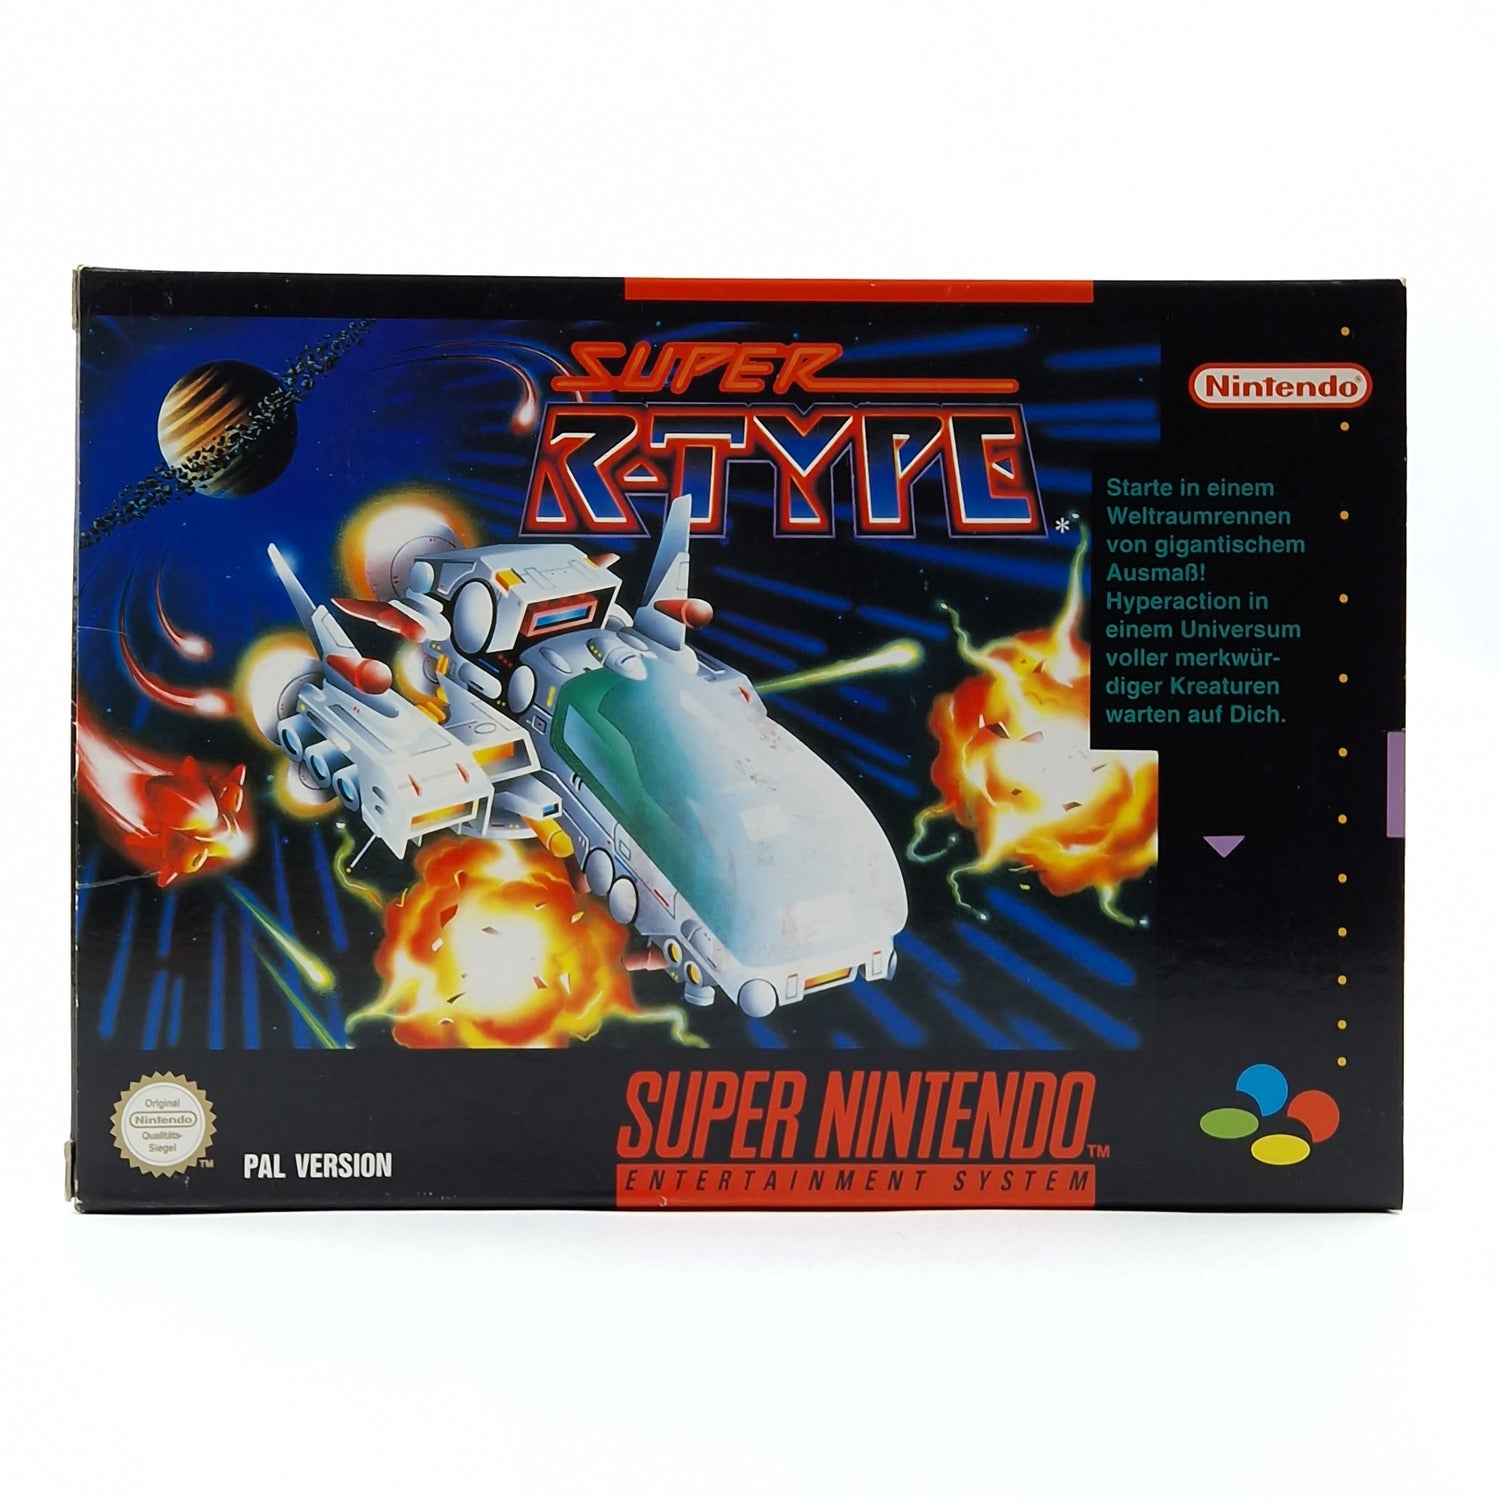 Super Nintendo Game: Super R-Type - Module Instructions OVP cib / SNES PAL NOE